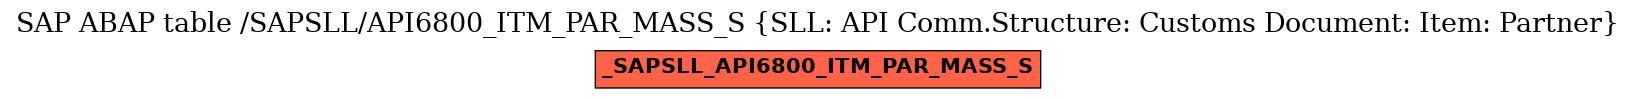 E-R Diagram for table /SAPSLL/API6800_ITM_PAR_MASS_S (SLL: API Comm.Structure: Customs Document: Item: Partner)